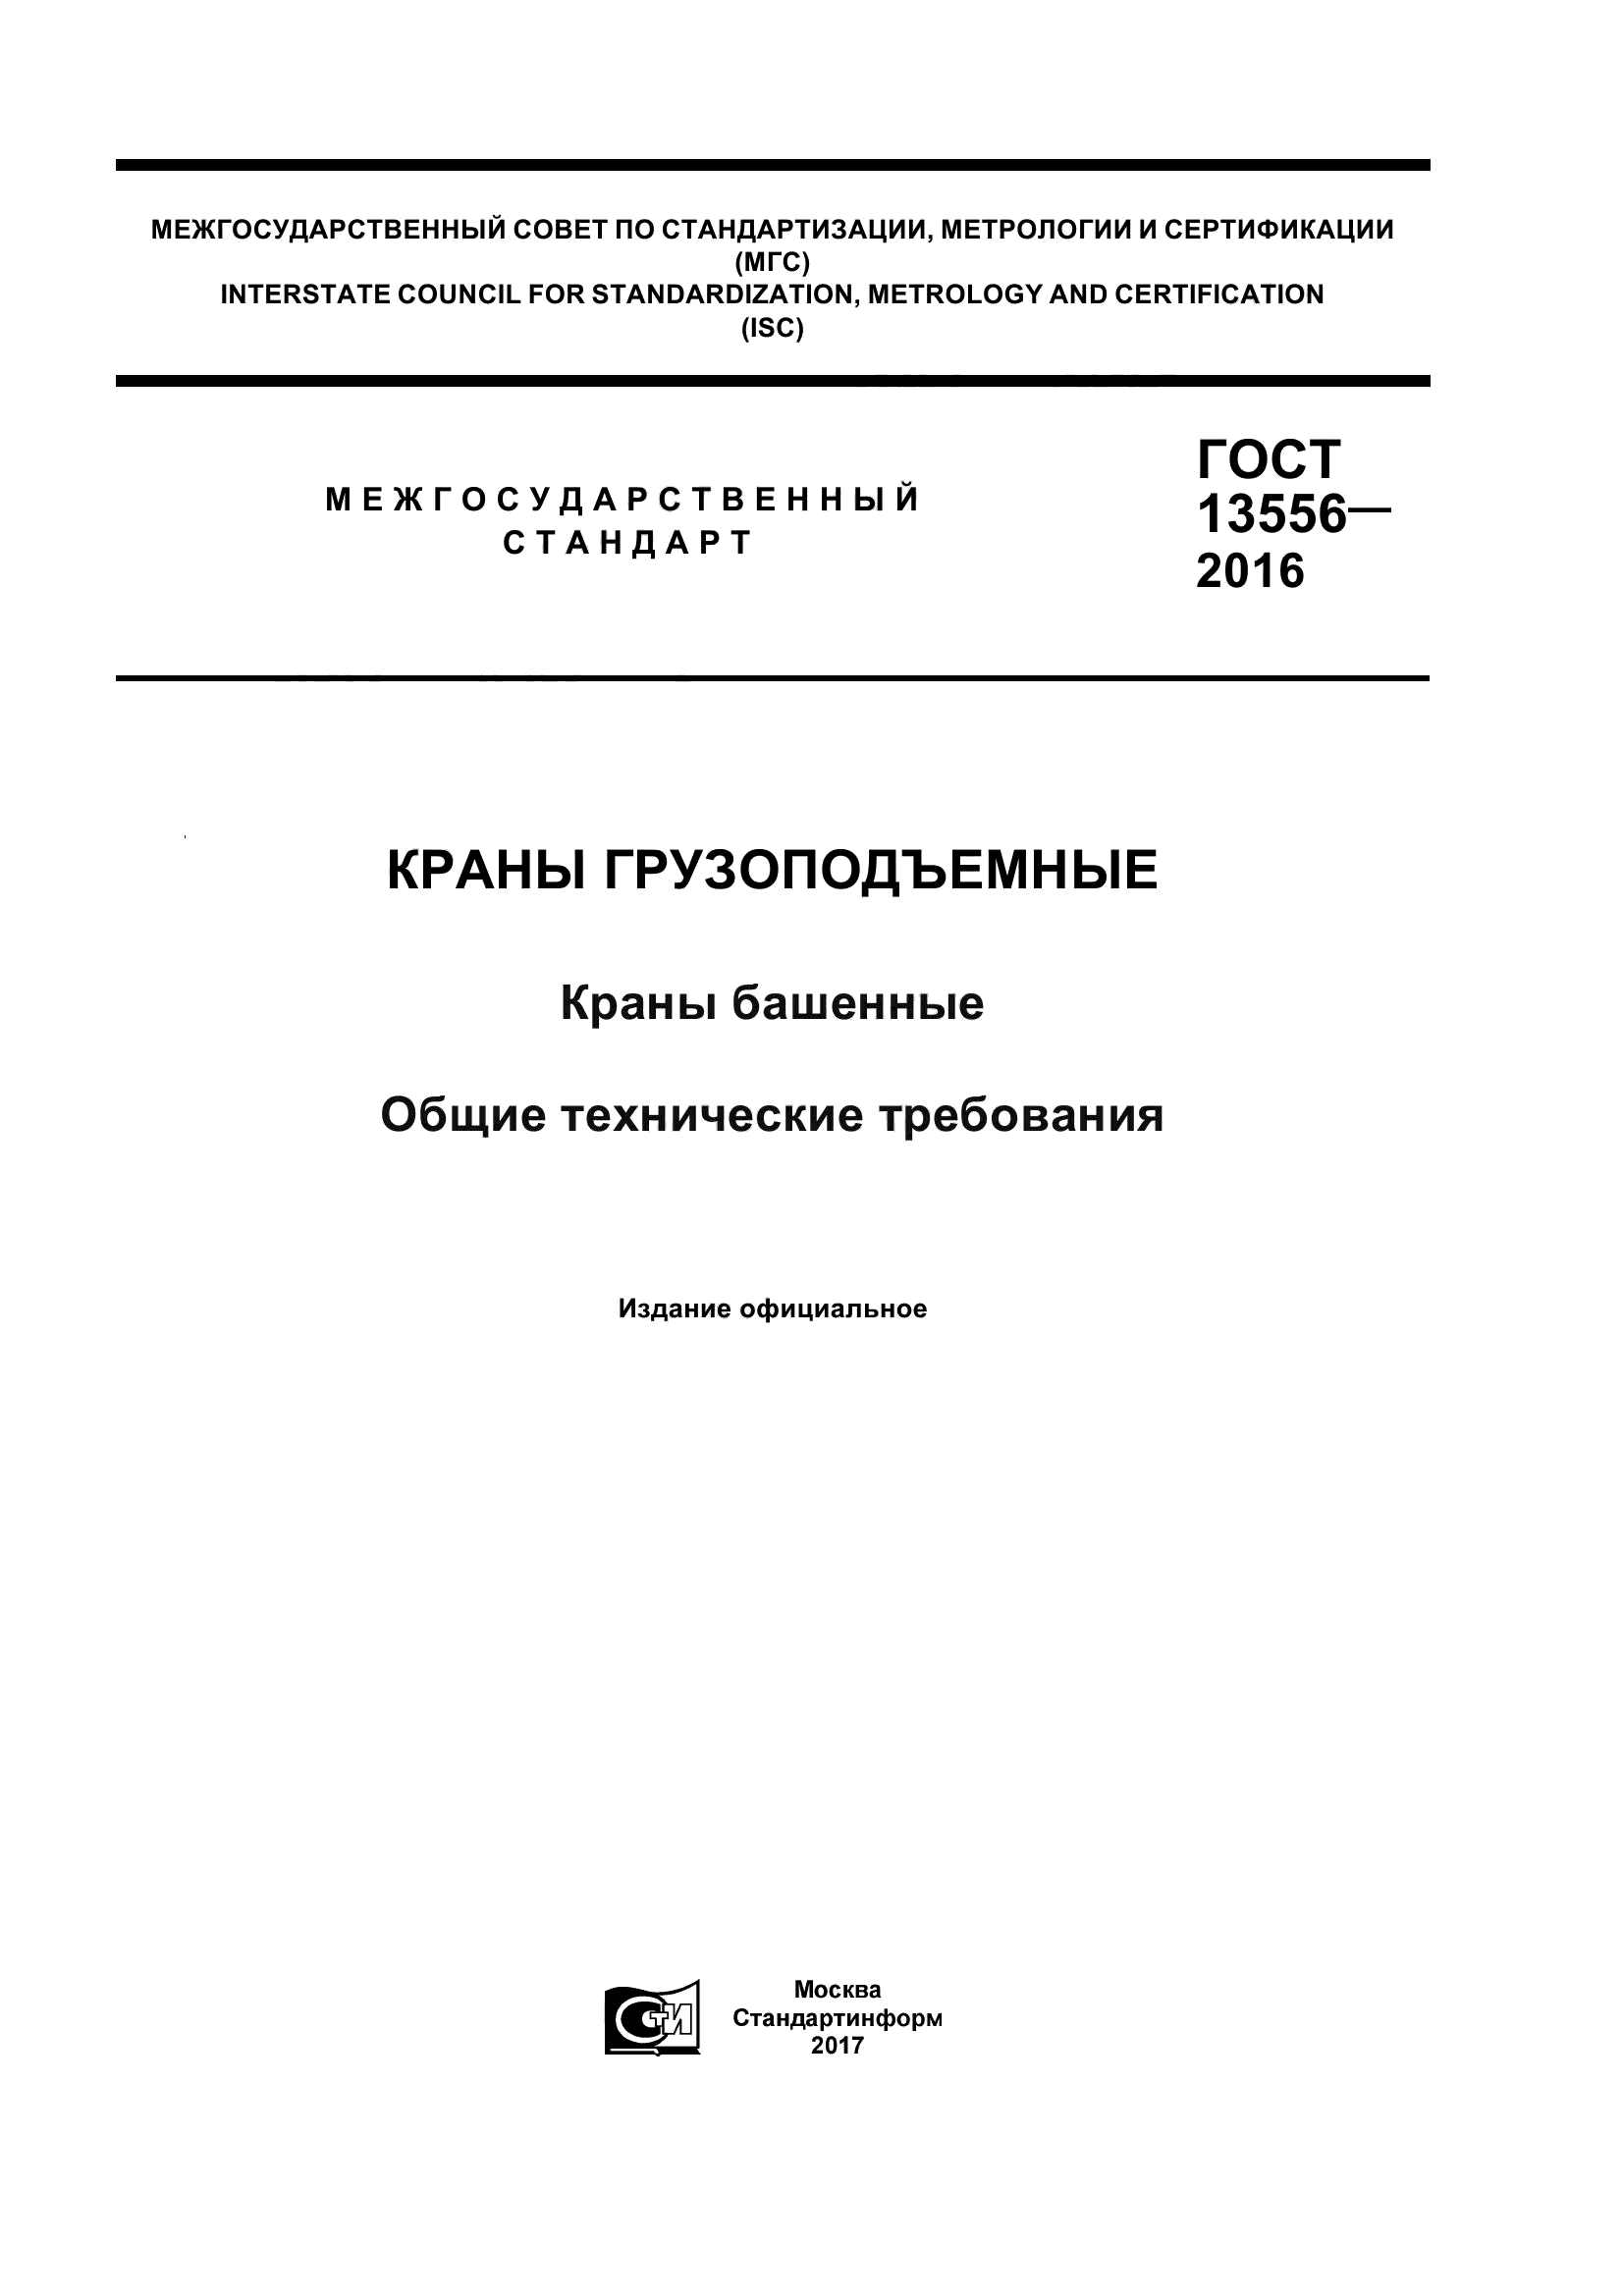 ГОСТ 13556-2016